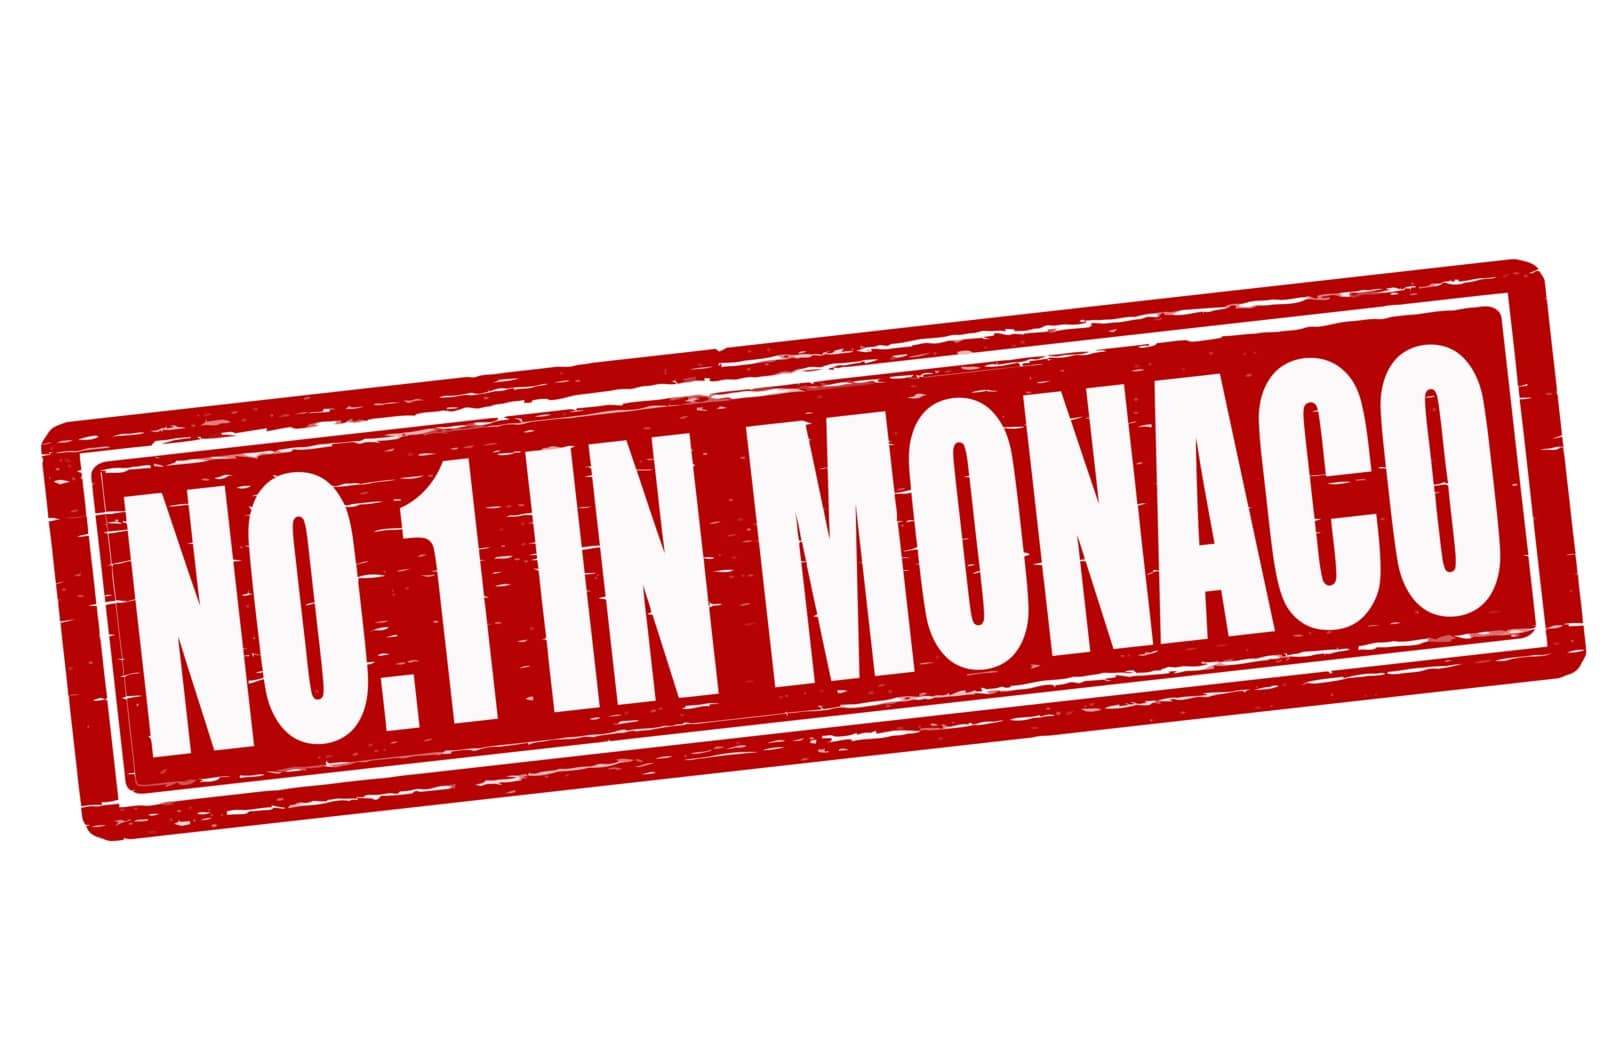 No one in Monaco by carmenbobo